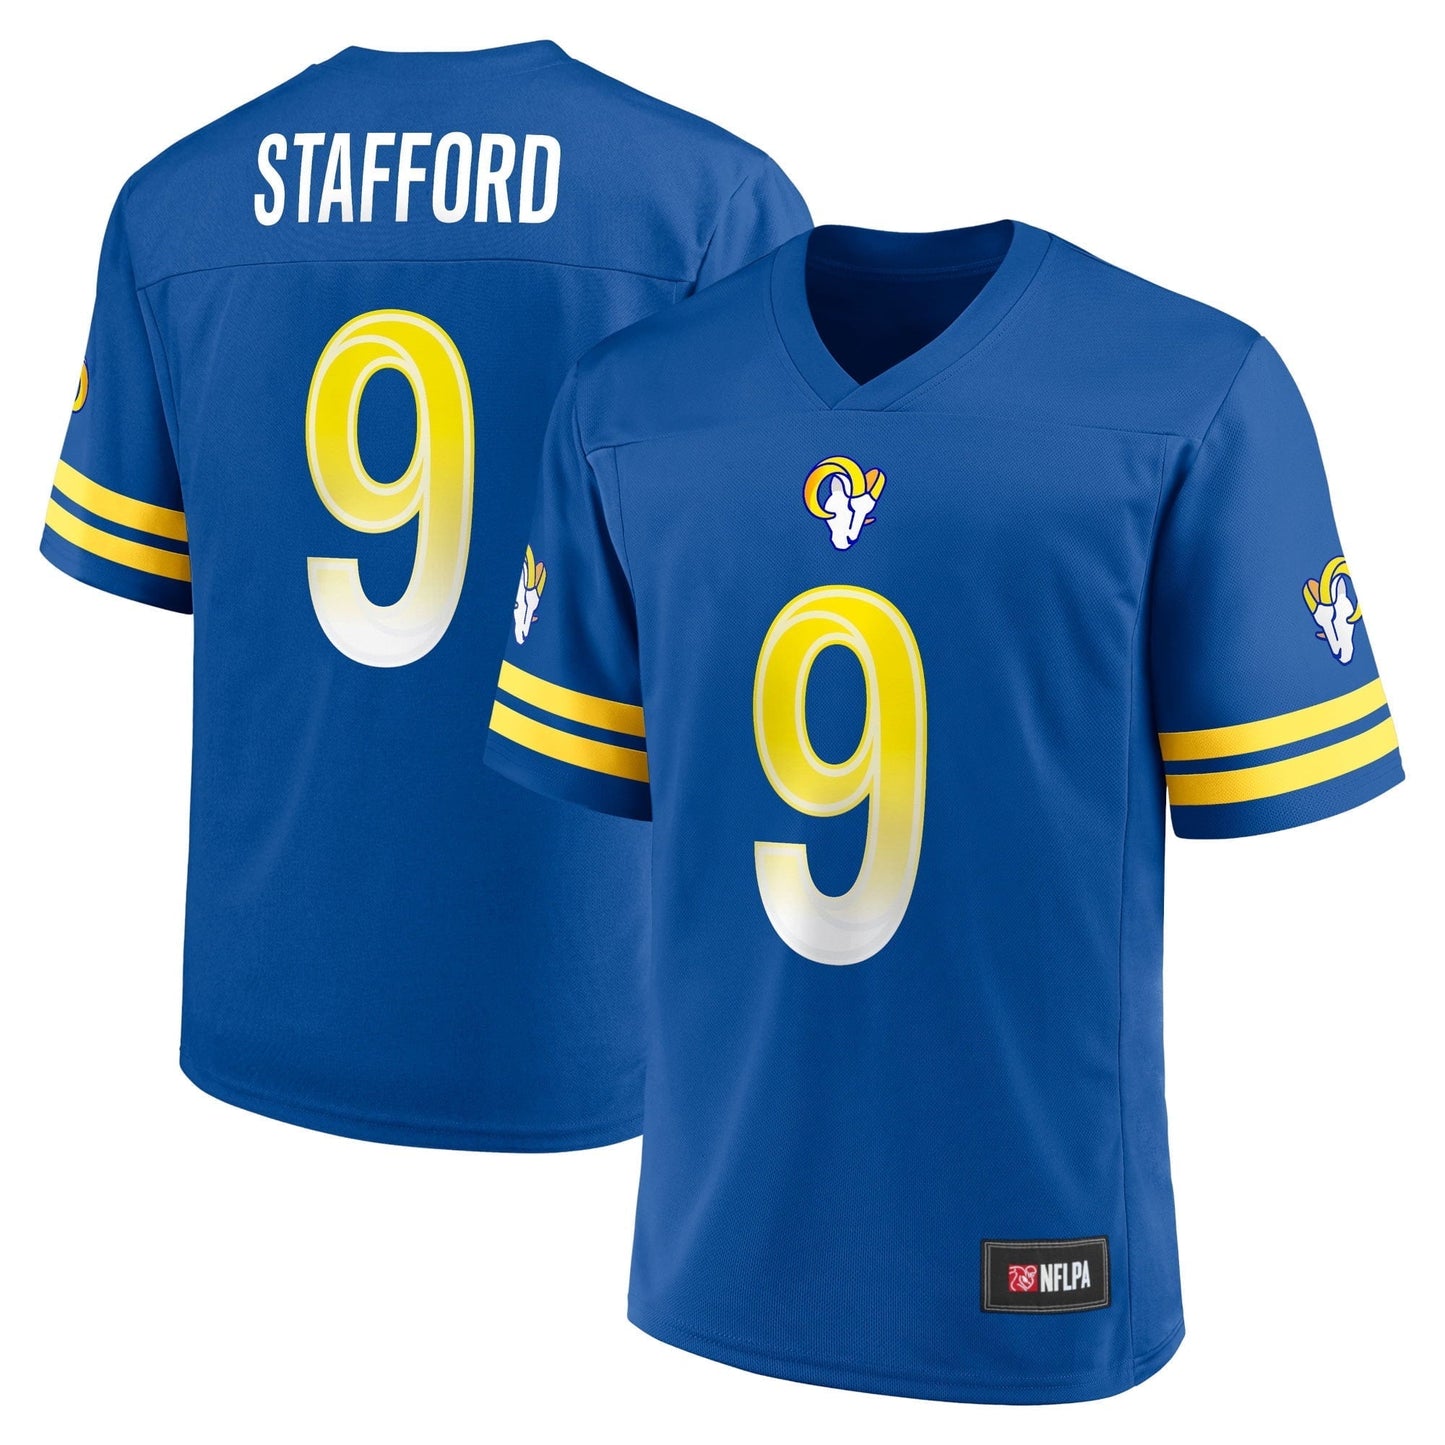 Men's Fanatics Branded Matthew Stafford Royal Los Angeles Rams Replica Player Jersey